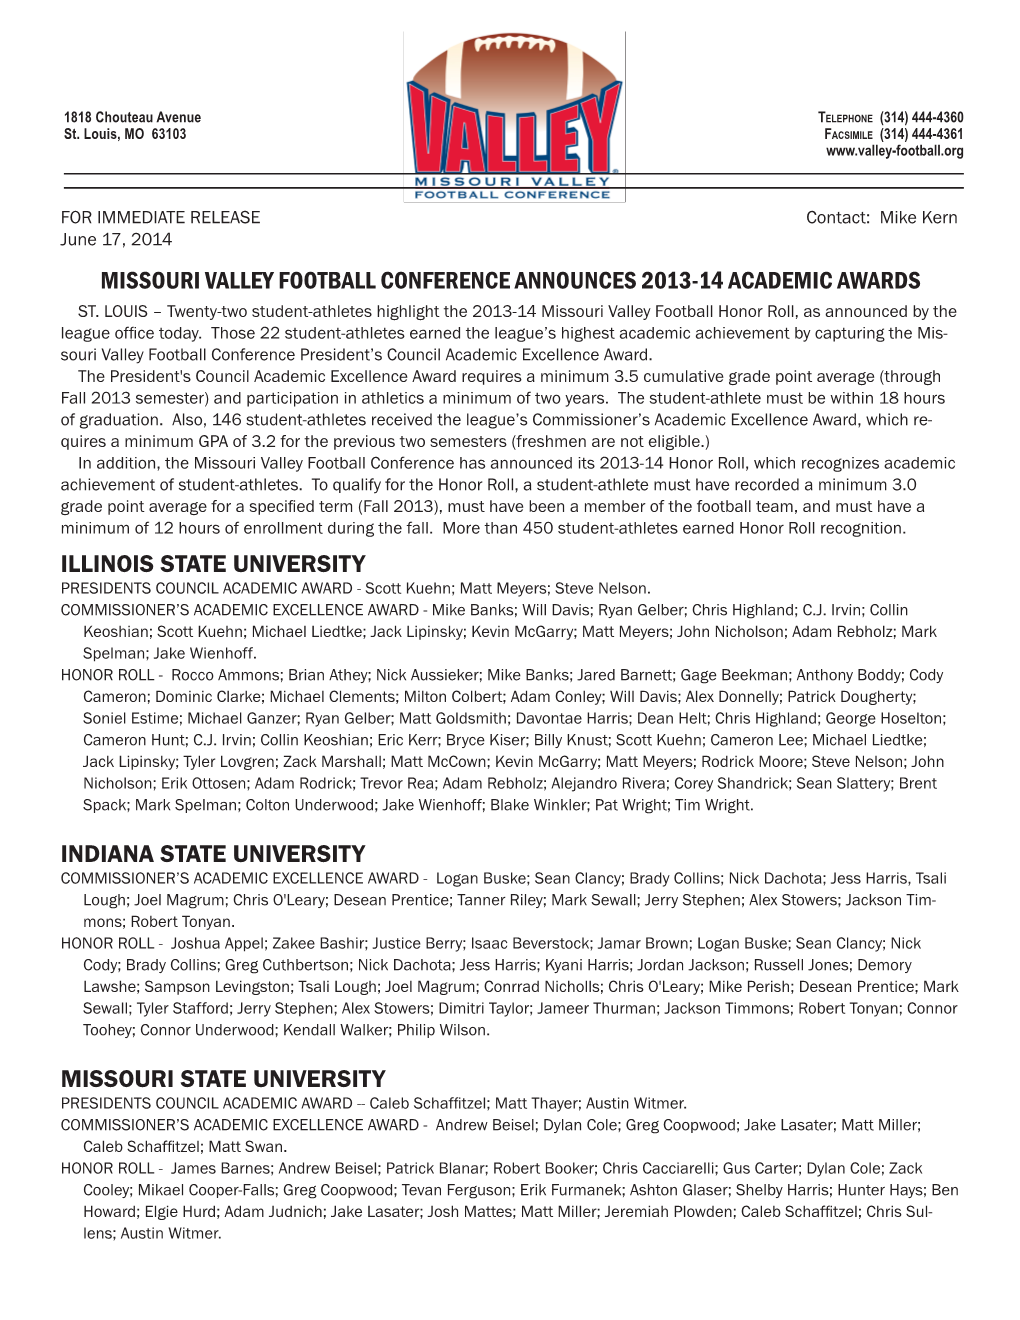 Missouri Valley Football Conference Announces 2013-14 Academic Awards Illinois State University Indiana State University Missour